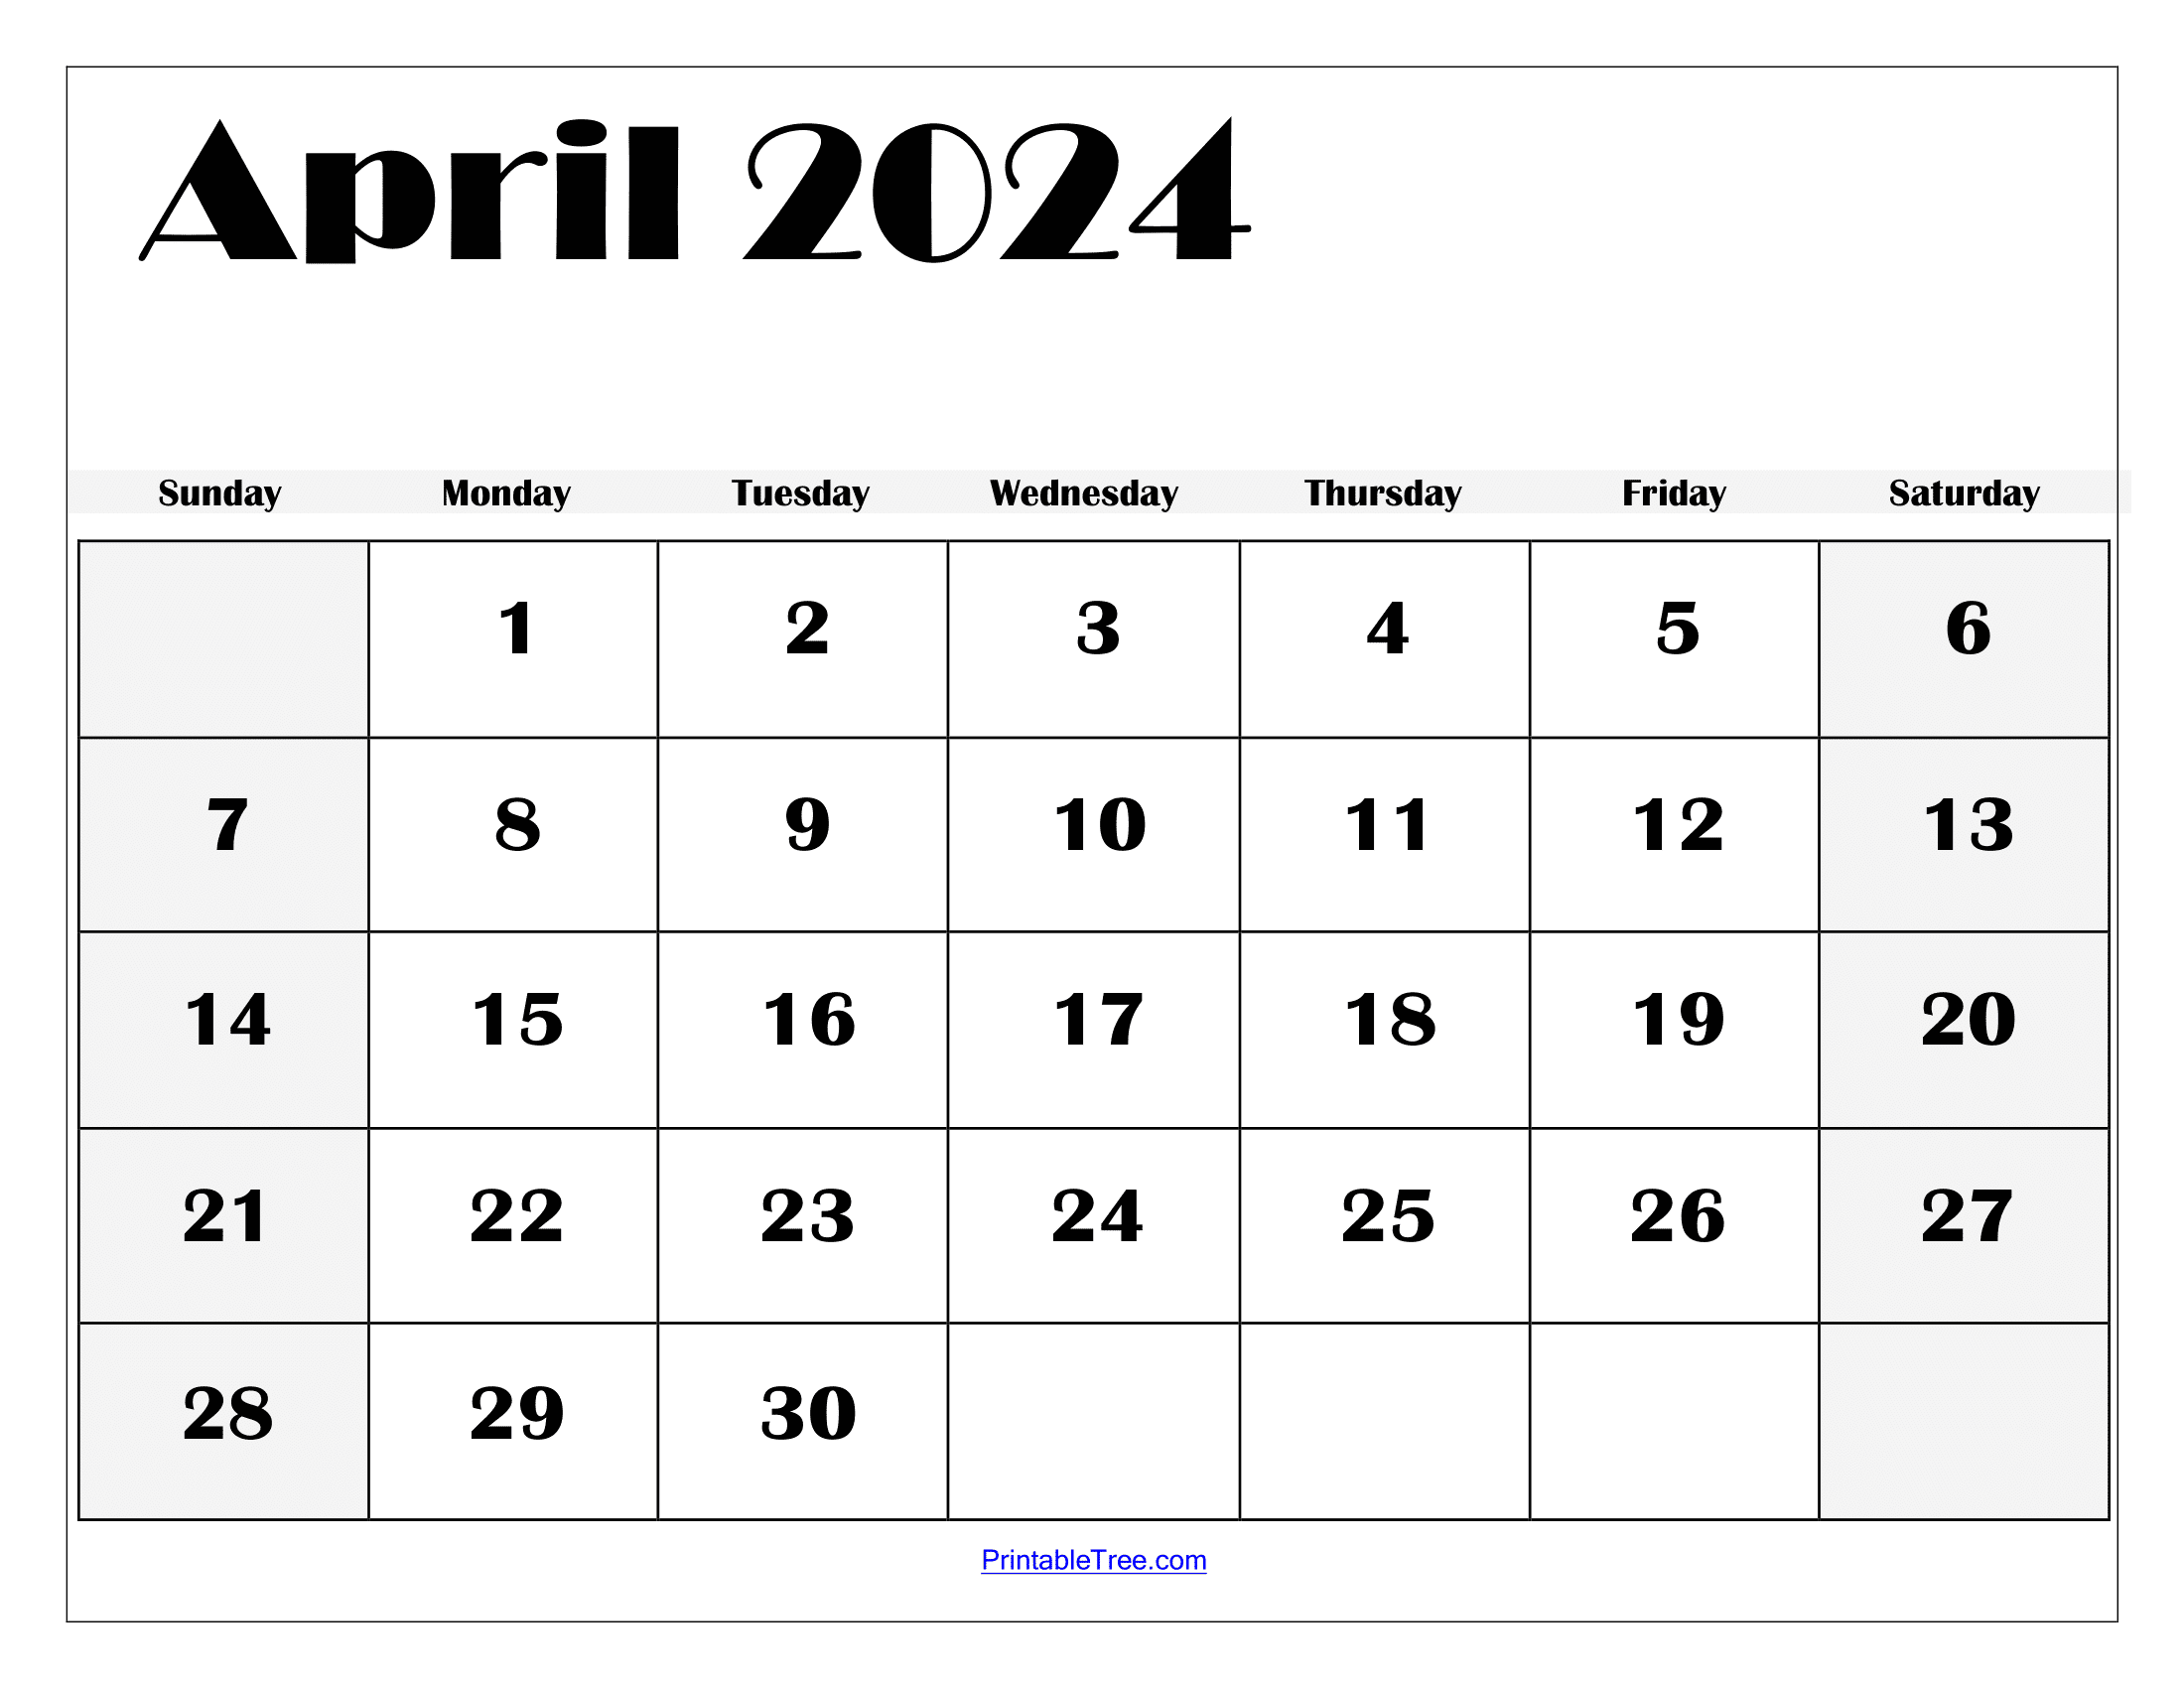 Blank April 2024 Calendar Printable Pdf Template With Holidays for April 2024 Printable Calendar Free